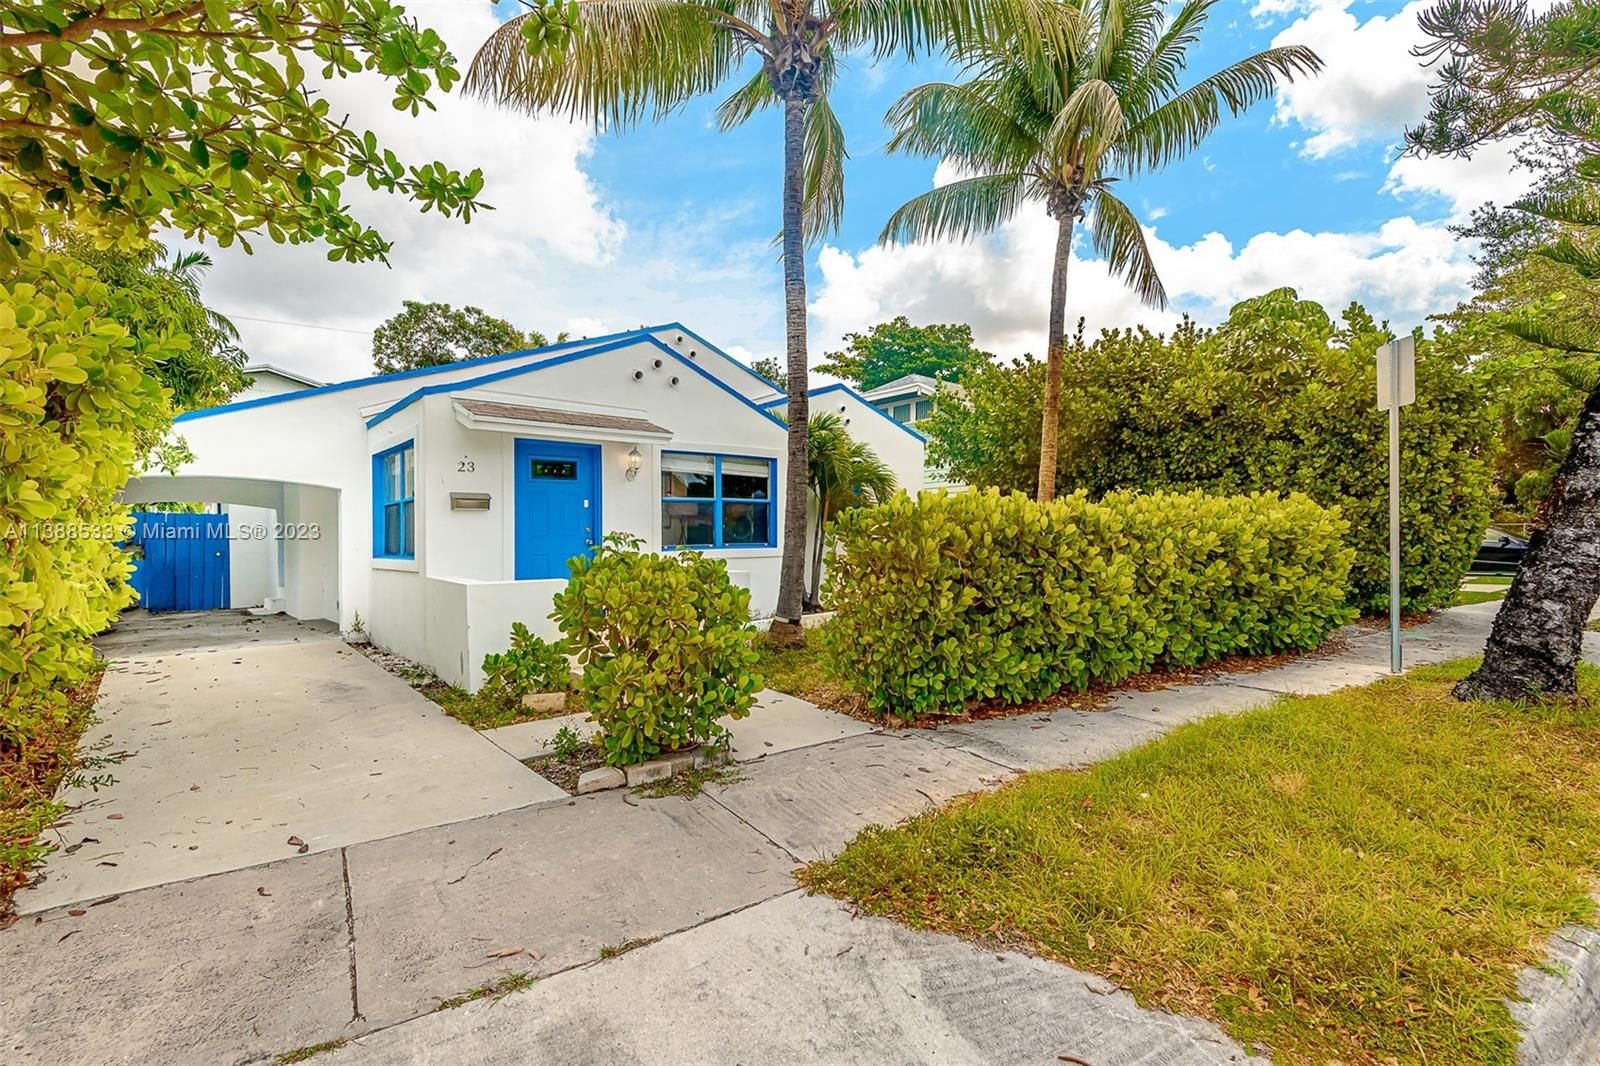 Real estate property located at 23 49th St, Miami-Dade County, Miami, FL